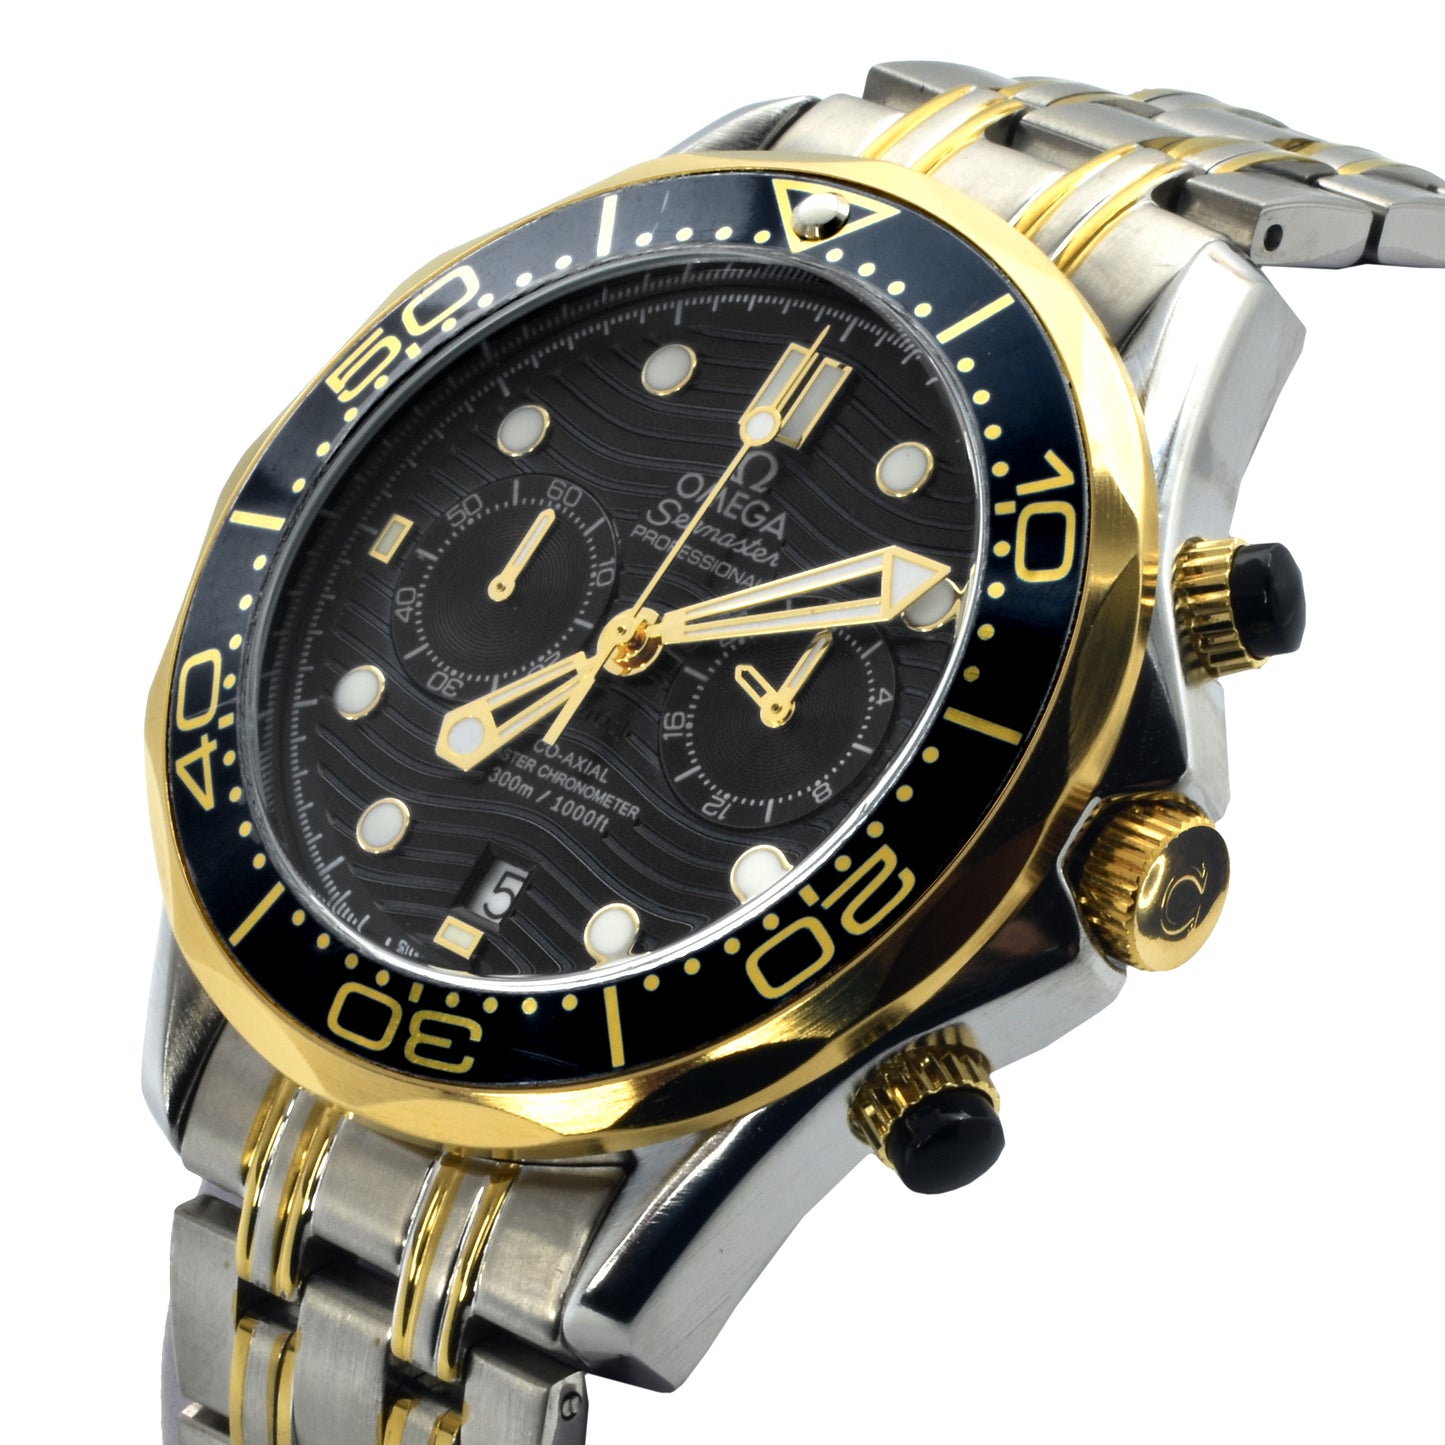 Premium Quality Chronograph Quartz Watch | OMGA Watch 1017